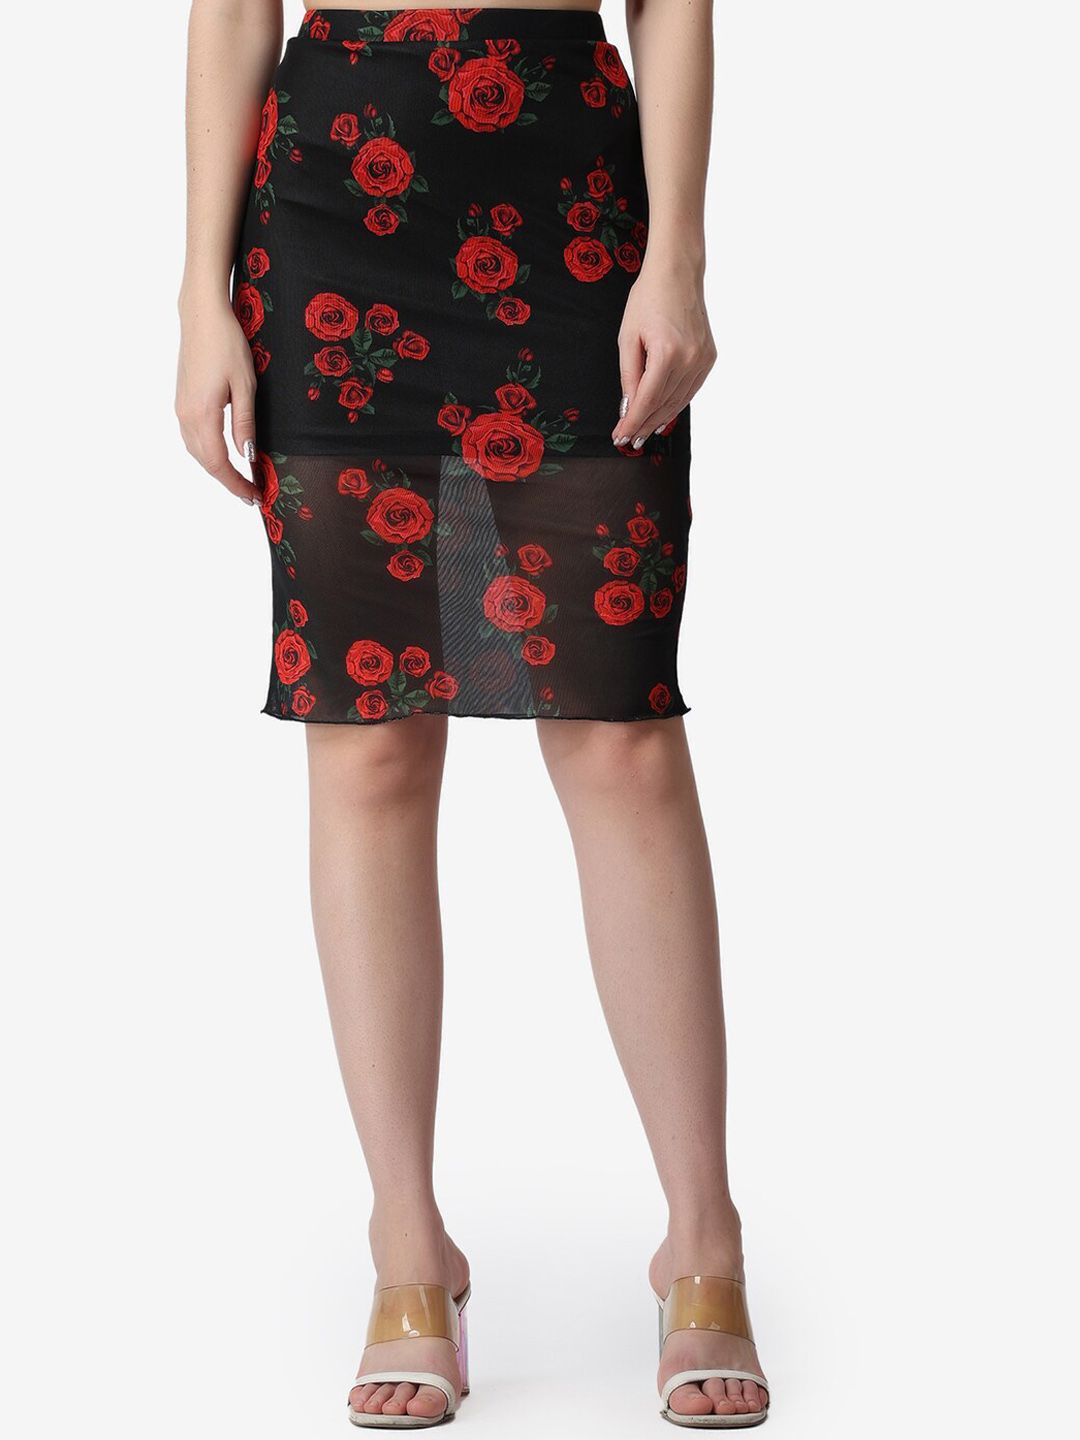 Popwings Floral Printed Pencil Skirt Price in India